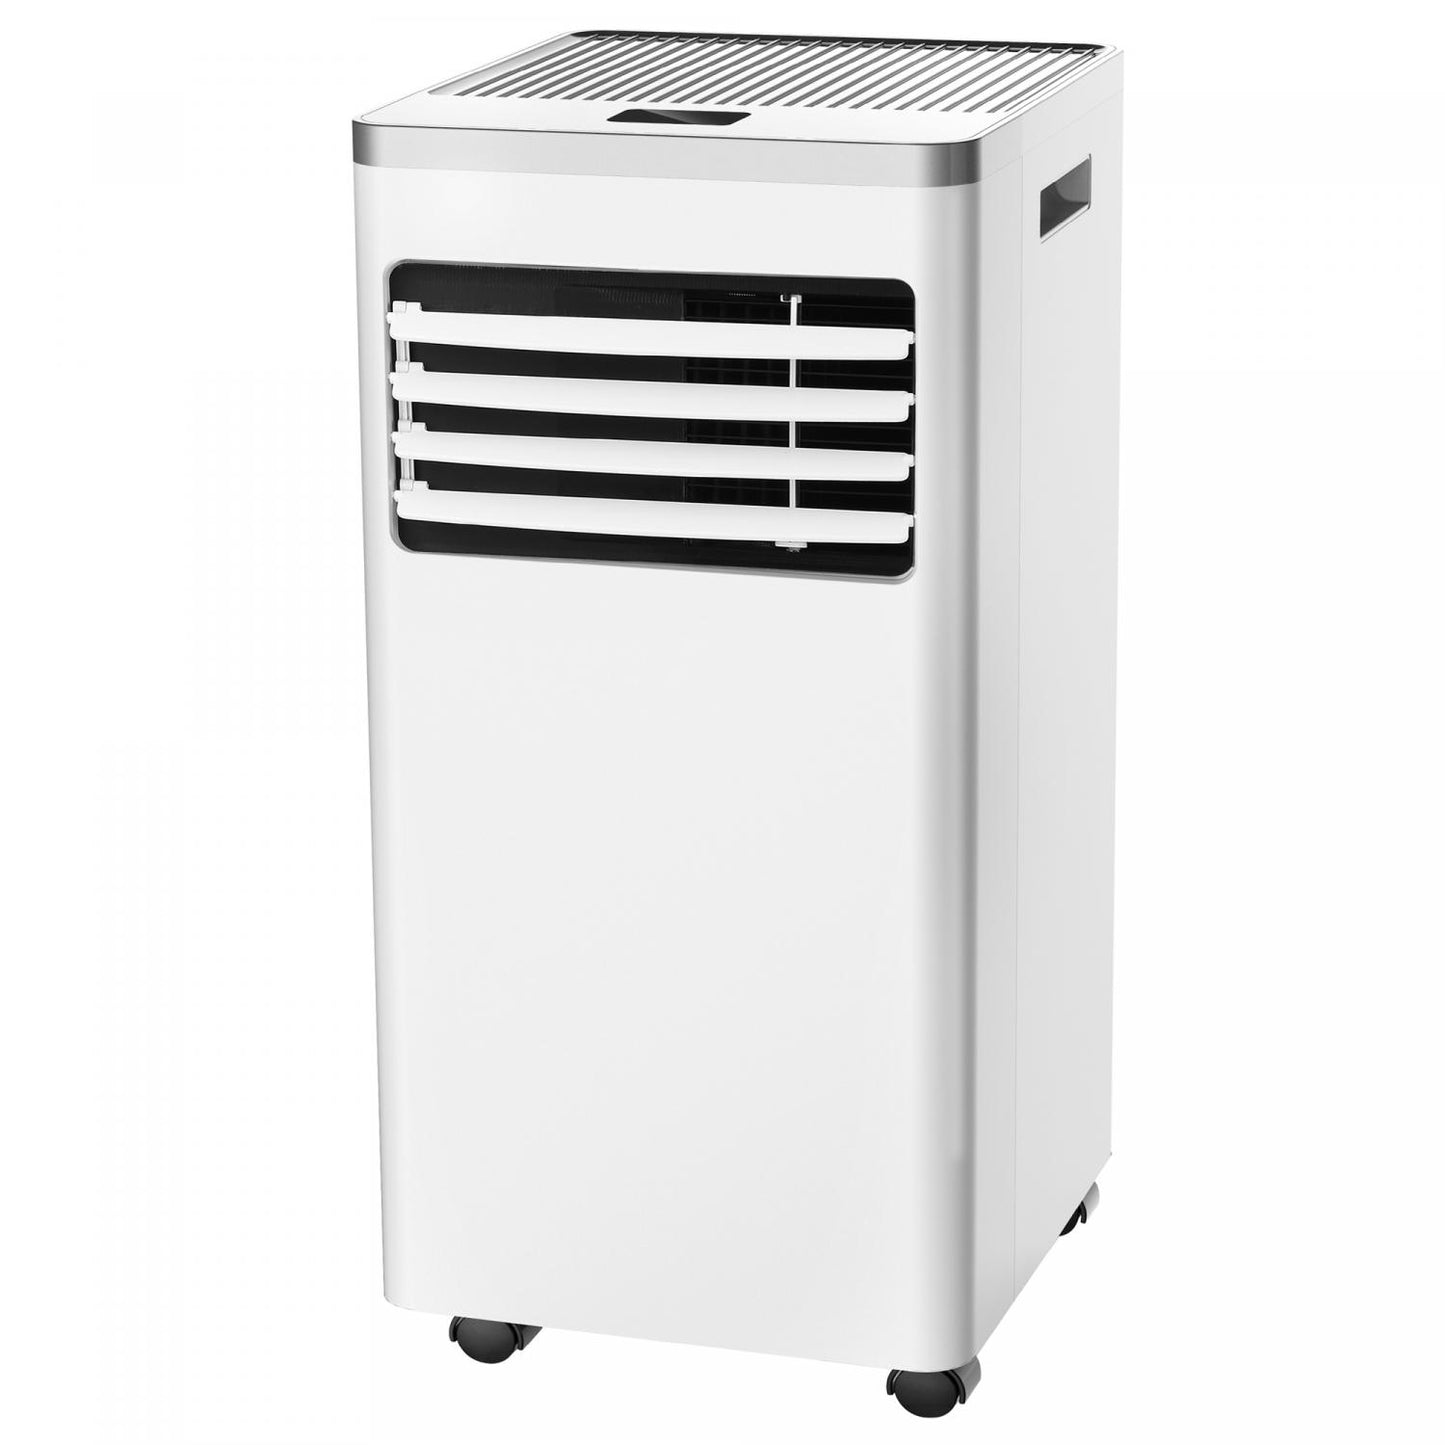 : 4-in-1 9000 BTU koelvermogen-airconditioner met WIFI